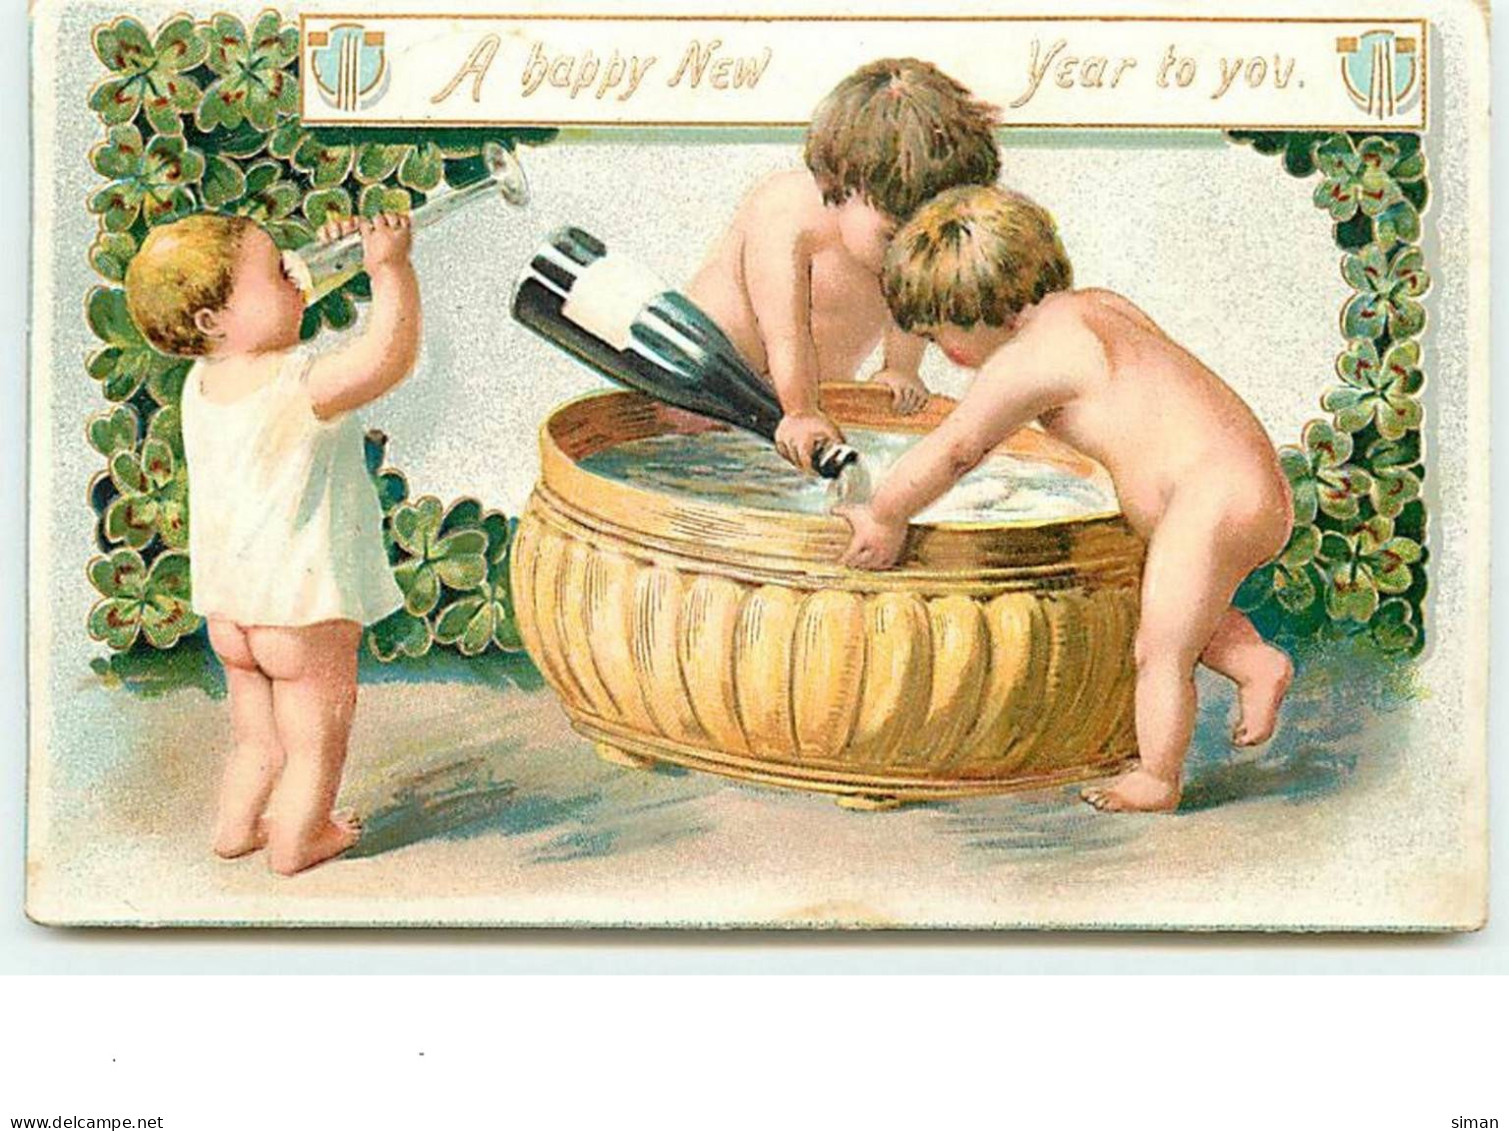 N°6339 - Carte Gaufrée - A Happy New Year To You - Enfants Buvant Du Champagne - New Year